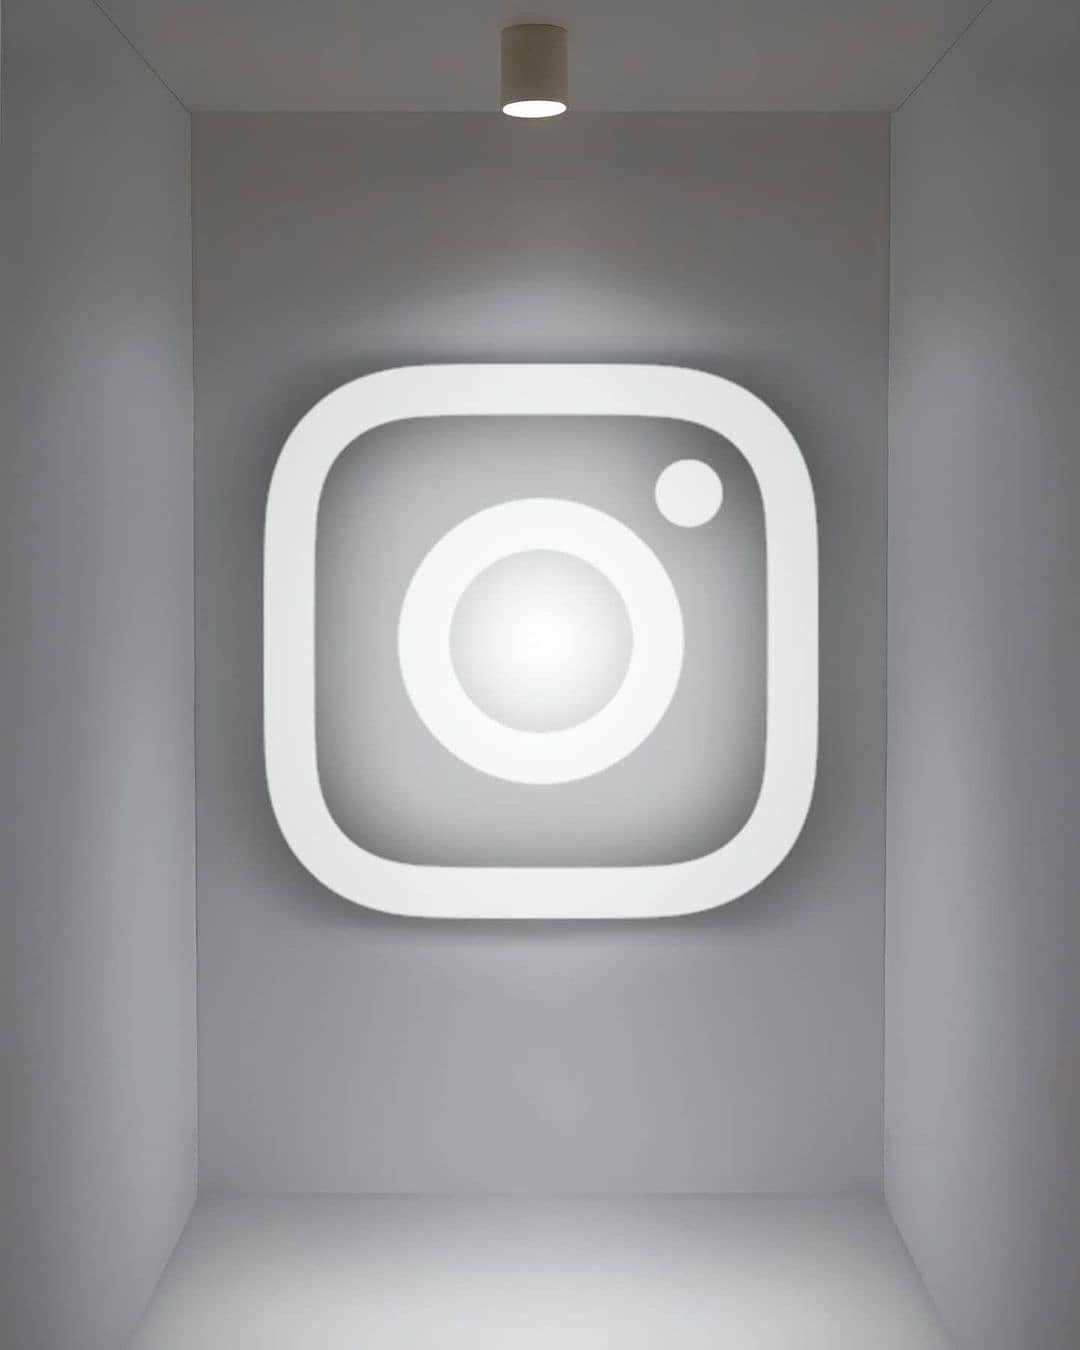 Instagram Lover Photo Editing | Instagram Creative Photo Editing ...